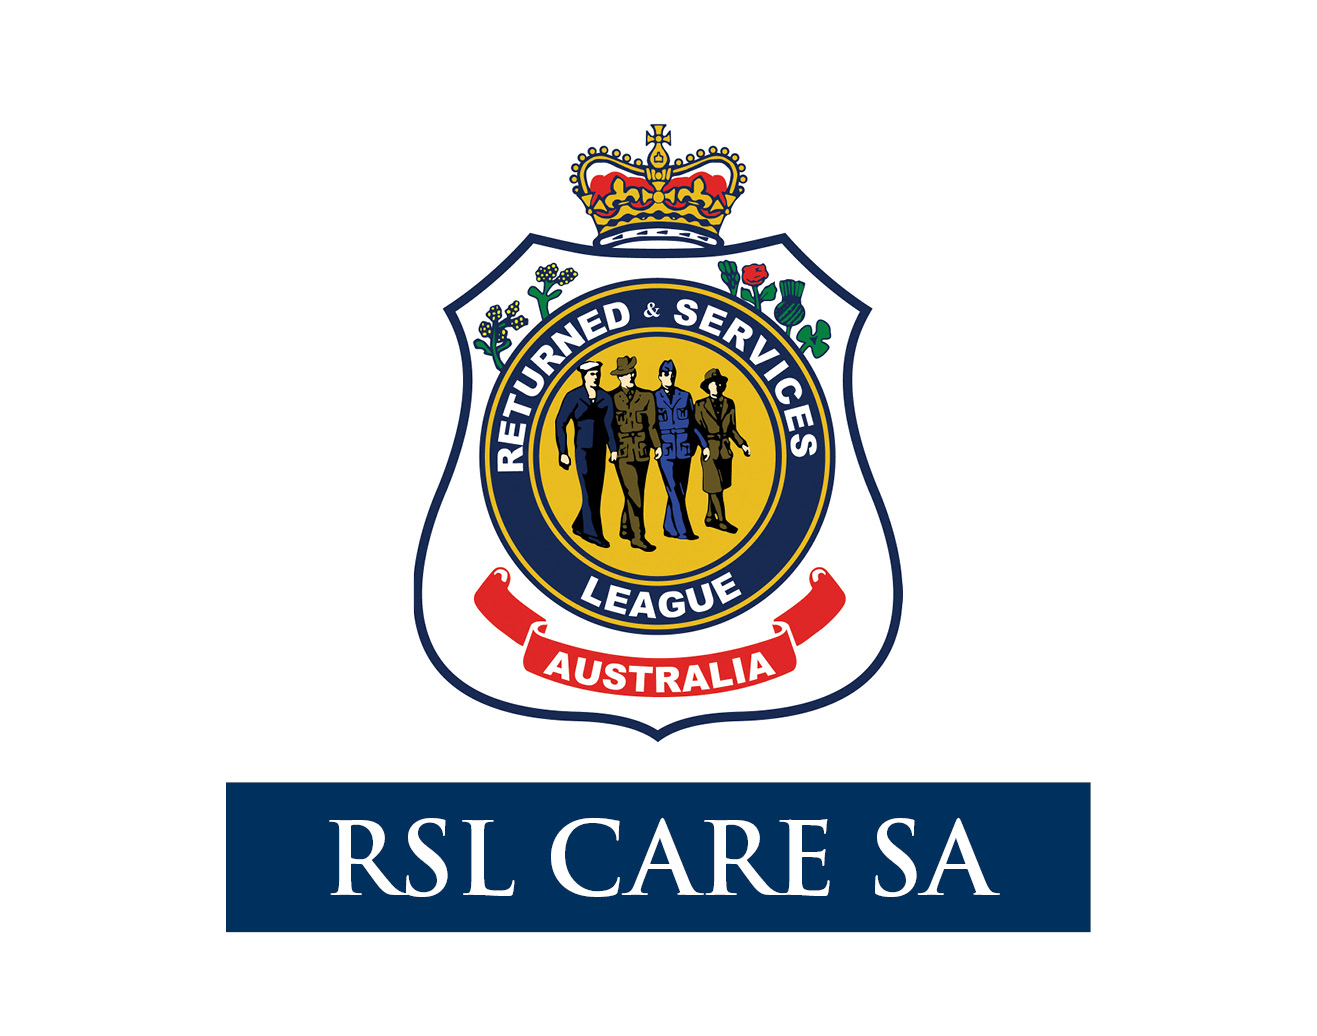 Our next 100 years at RSL Care SA